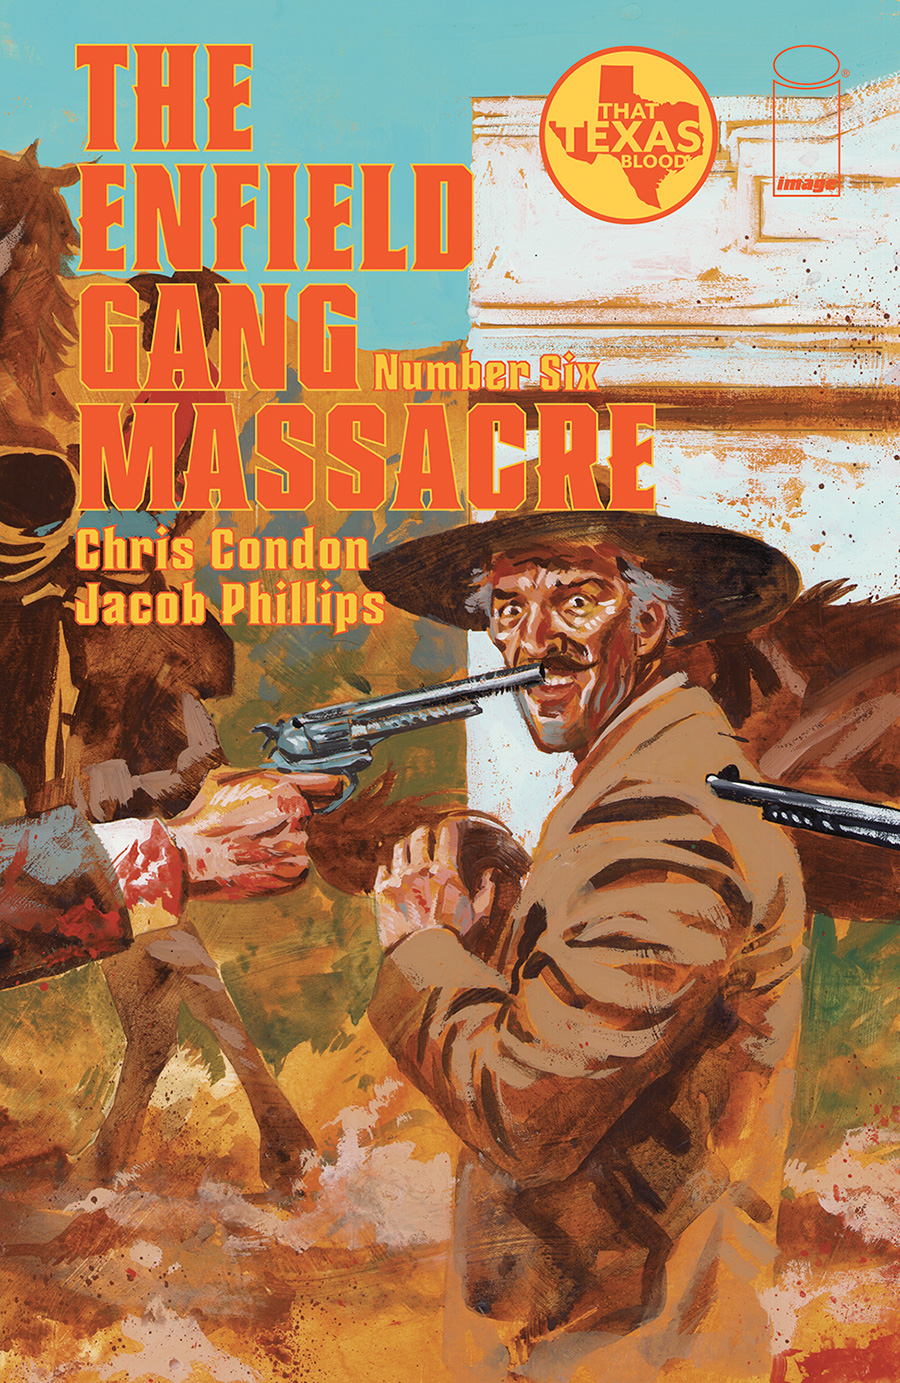 Enfield Gang Massacre #6 Cover A Regular Jacob Phillips Cover